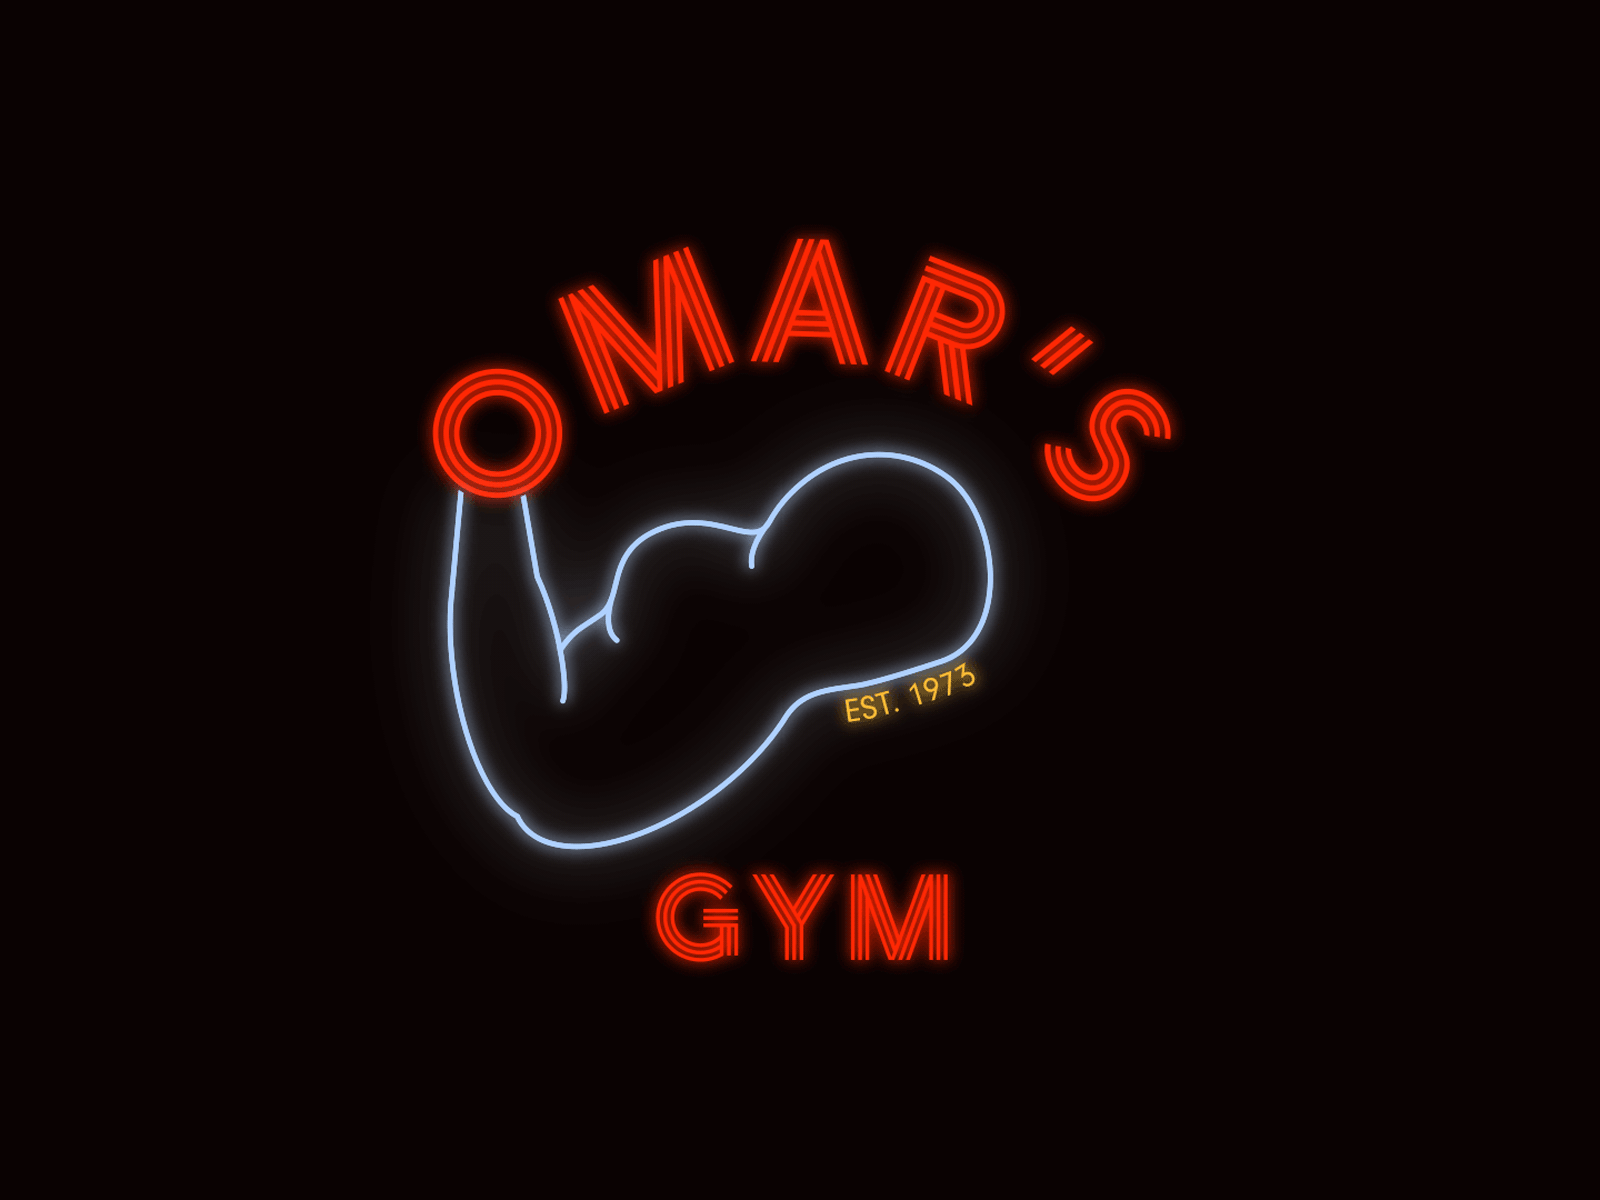 Omar's Gym